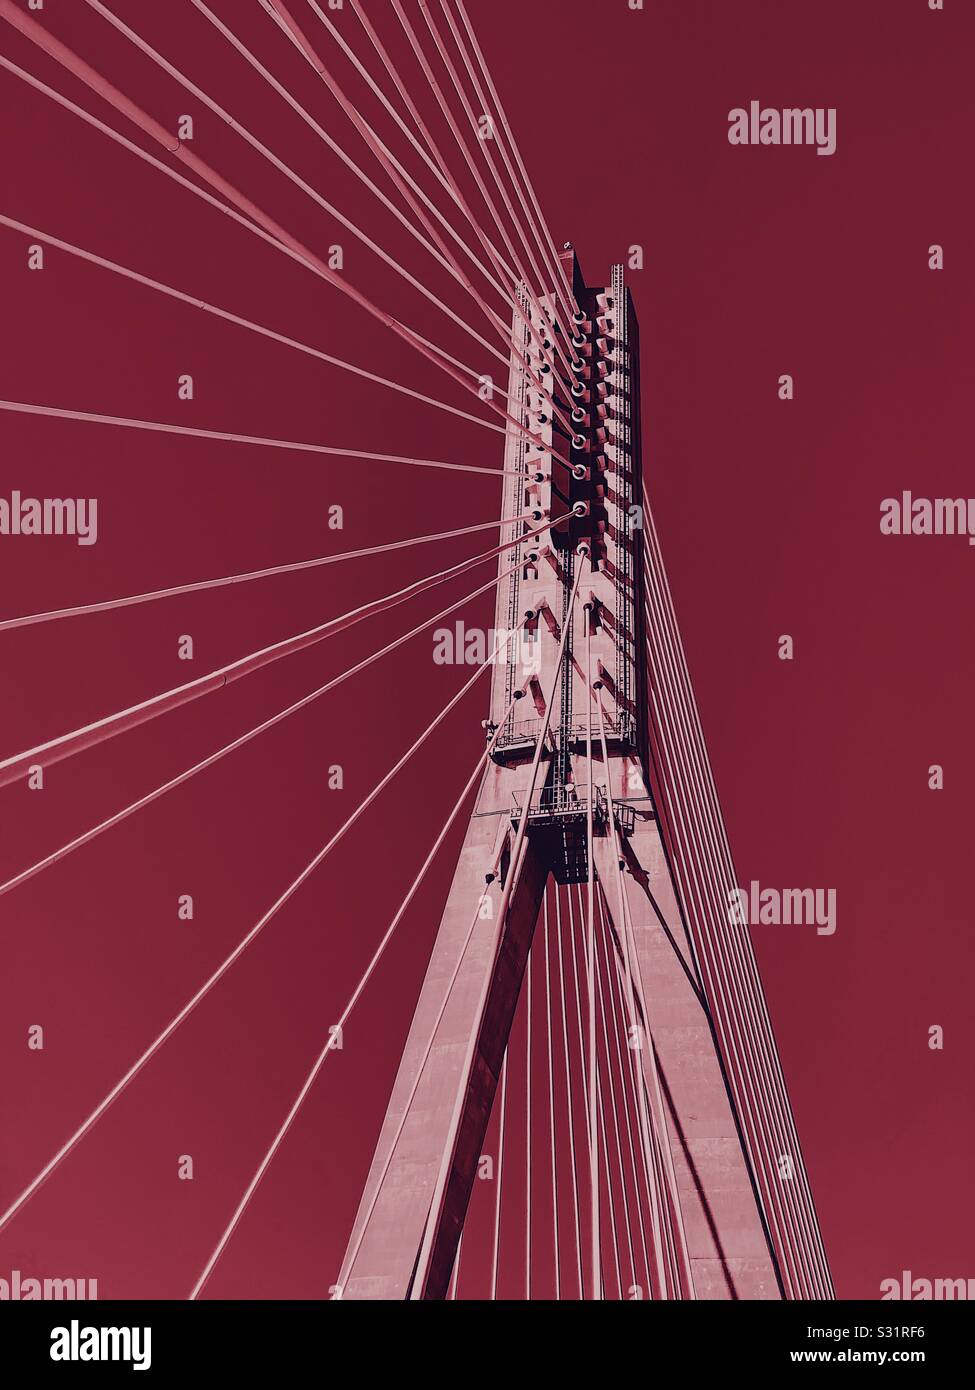 Abstract photo of a suspension bridge. Stock Photo